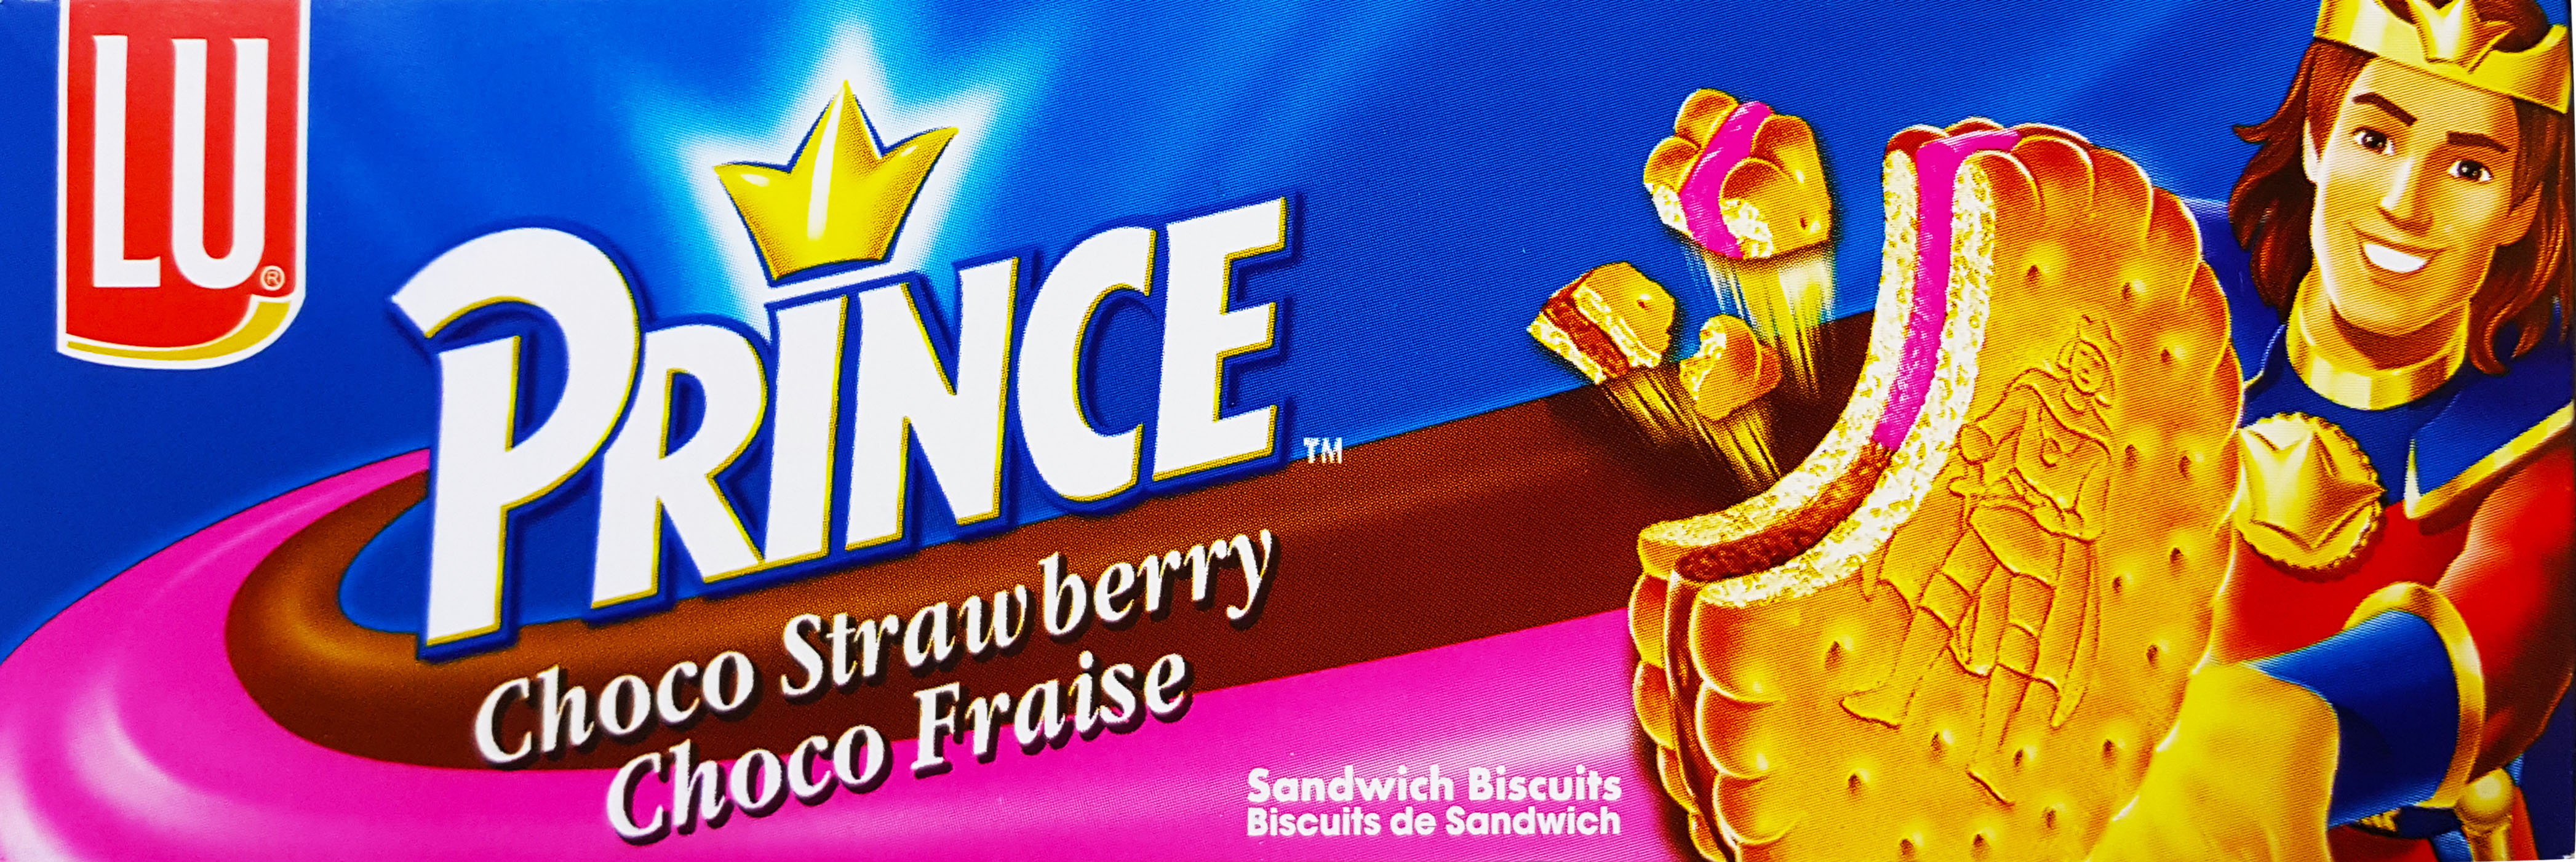 Prince Chocolate/Strawberry